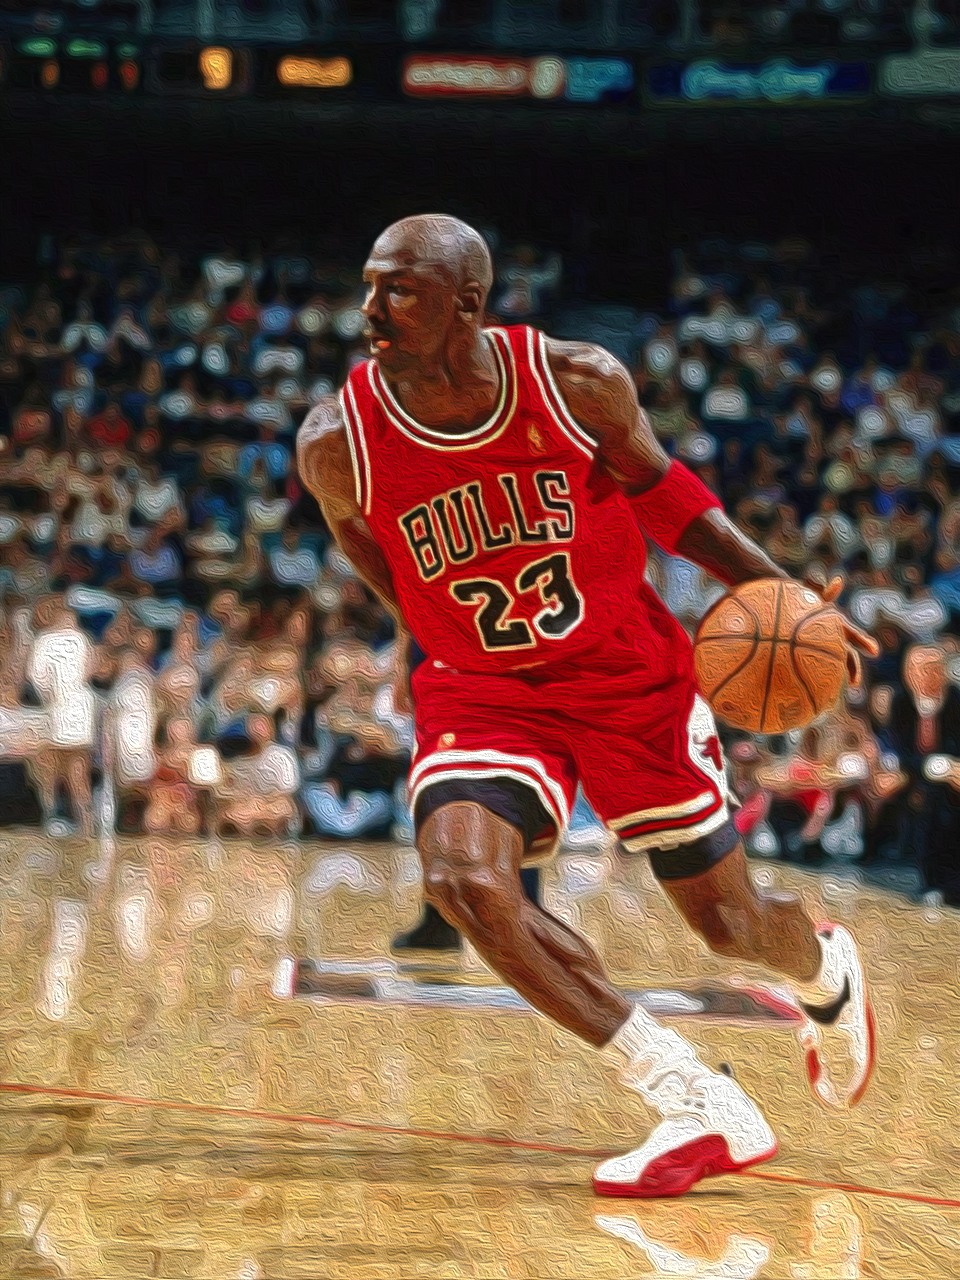 Michael Jordan wearing the Air Jordan 12 White/Varsity Red